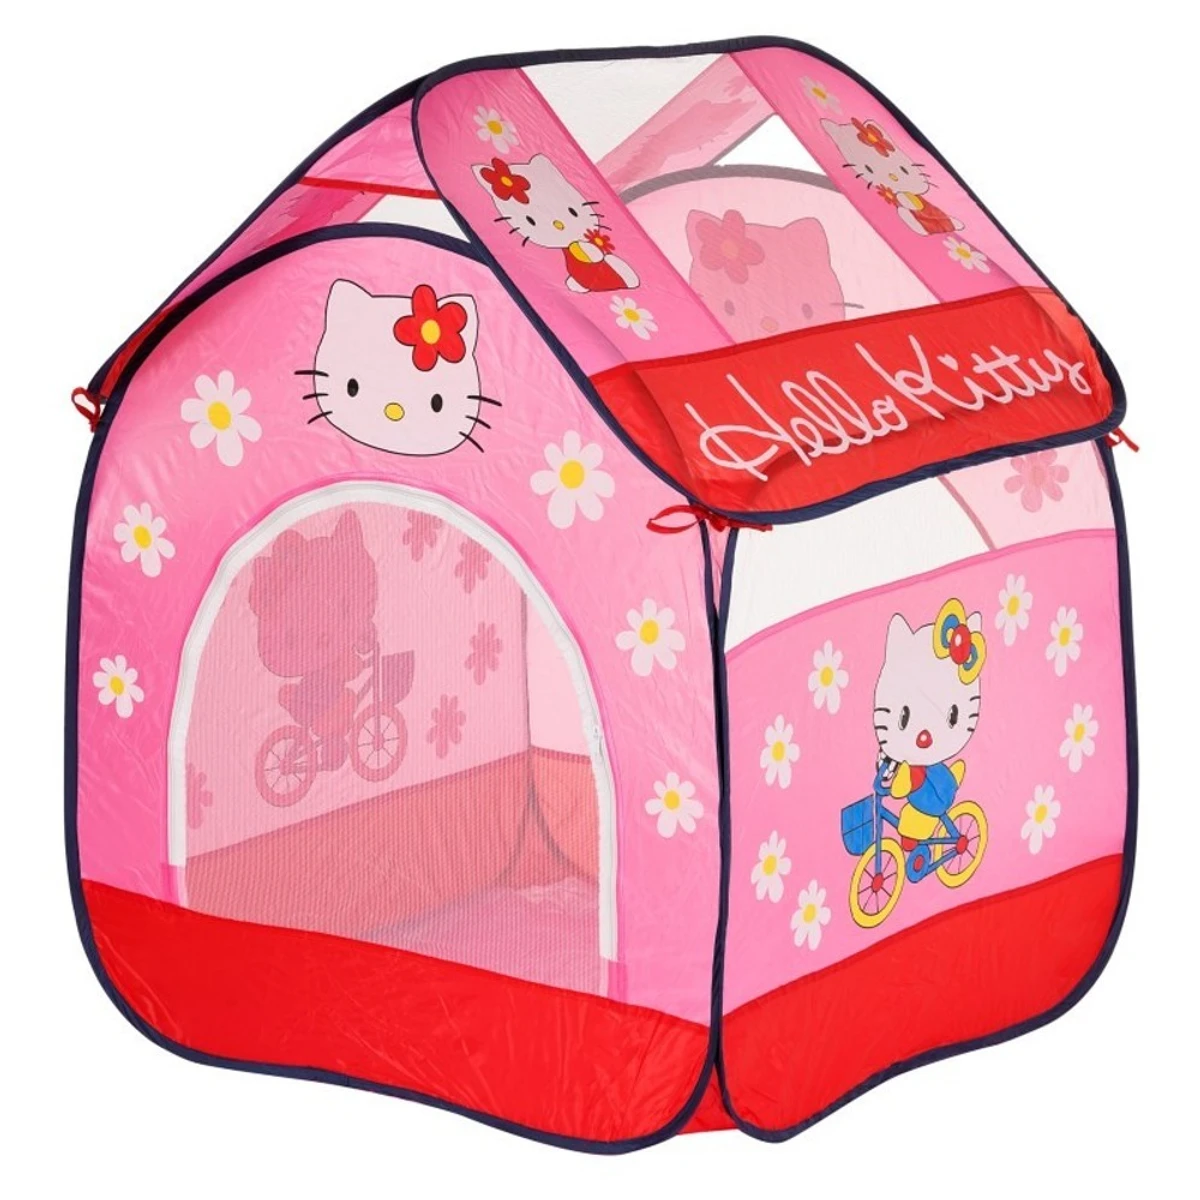 Kid's Tent House -Boll: 100 pcs